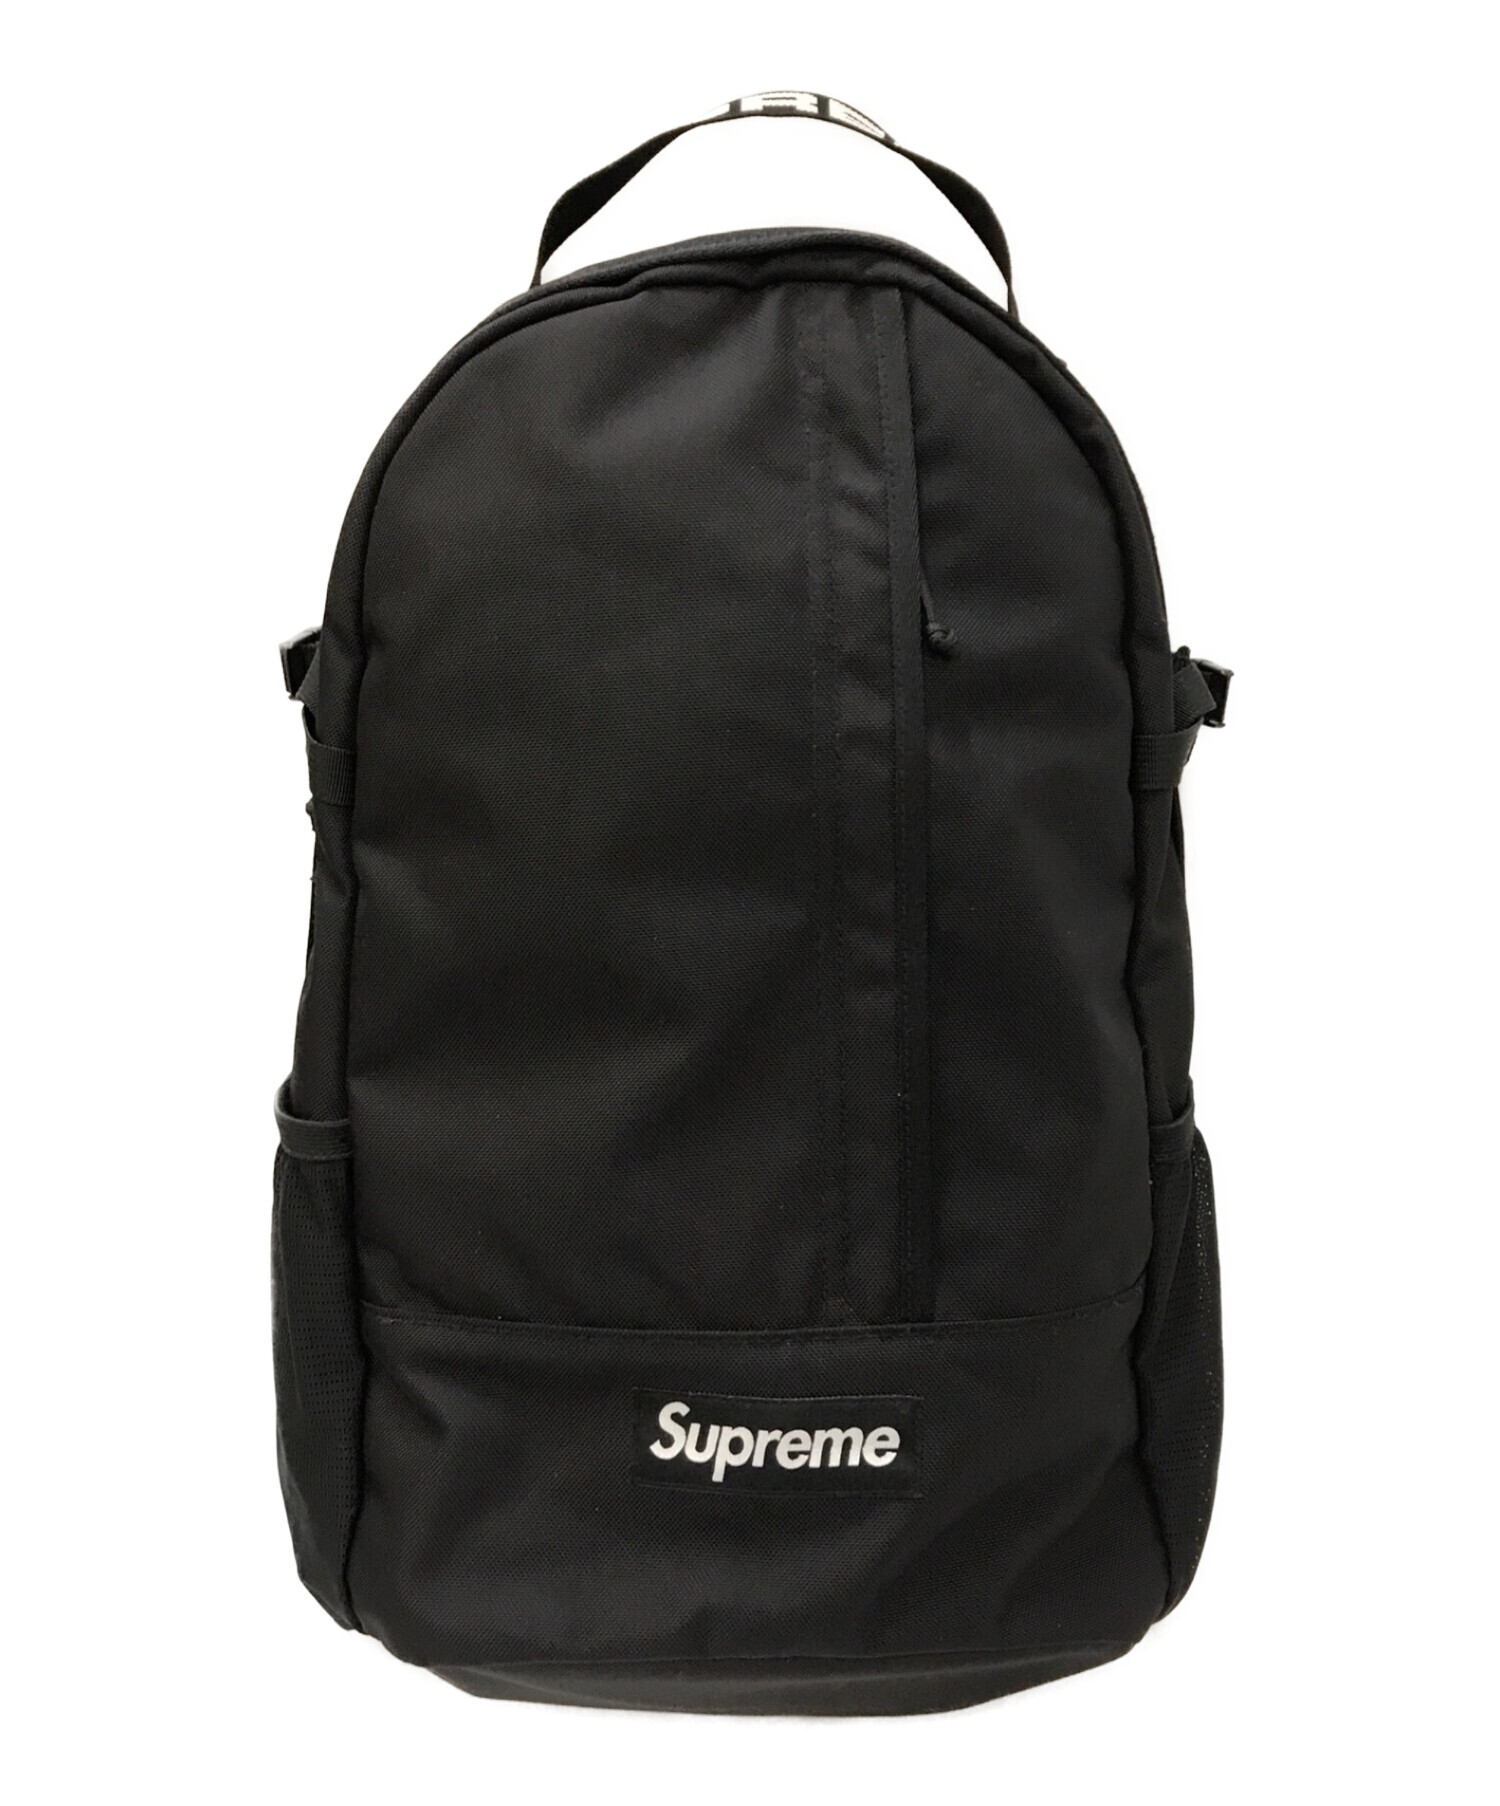 Supreme 18ss backpack